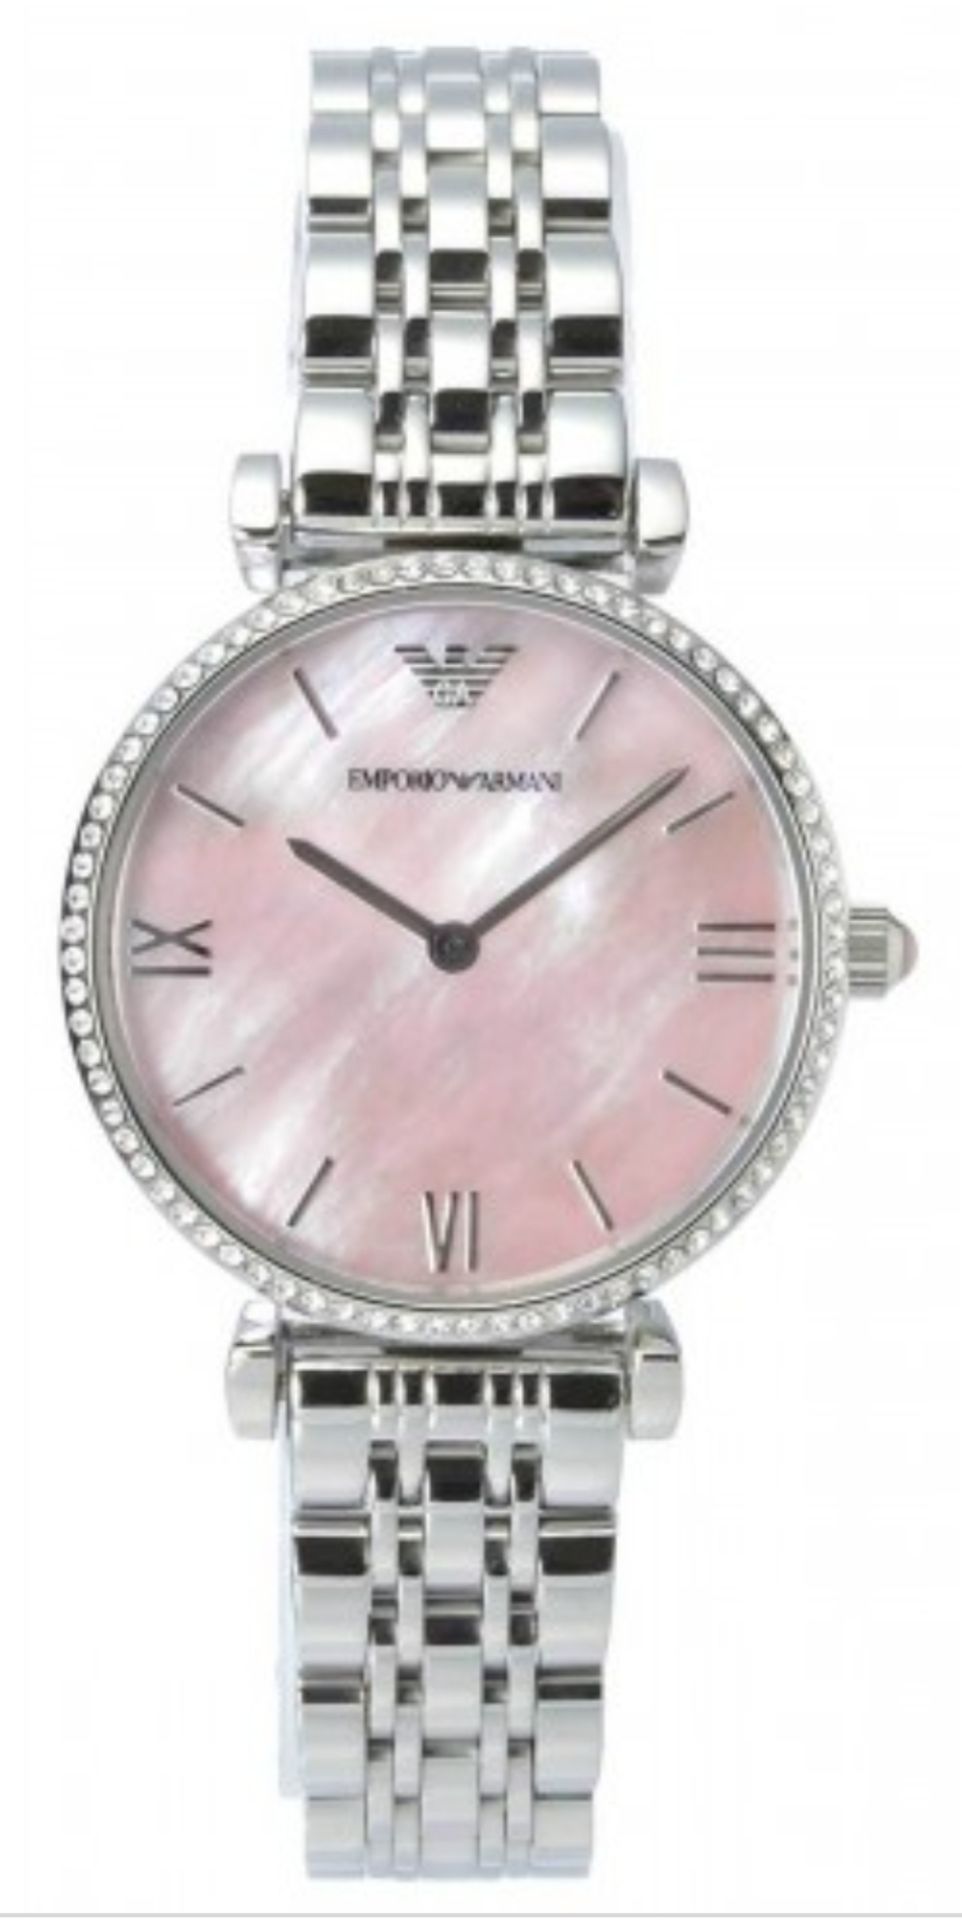 Emporio Armani AR1779 Ladies Gianni T-Bar Silver Bracelet Watch - Image 4 of 6